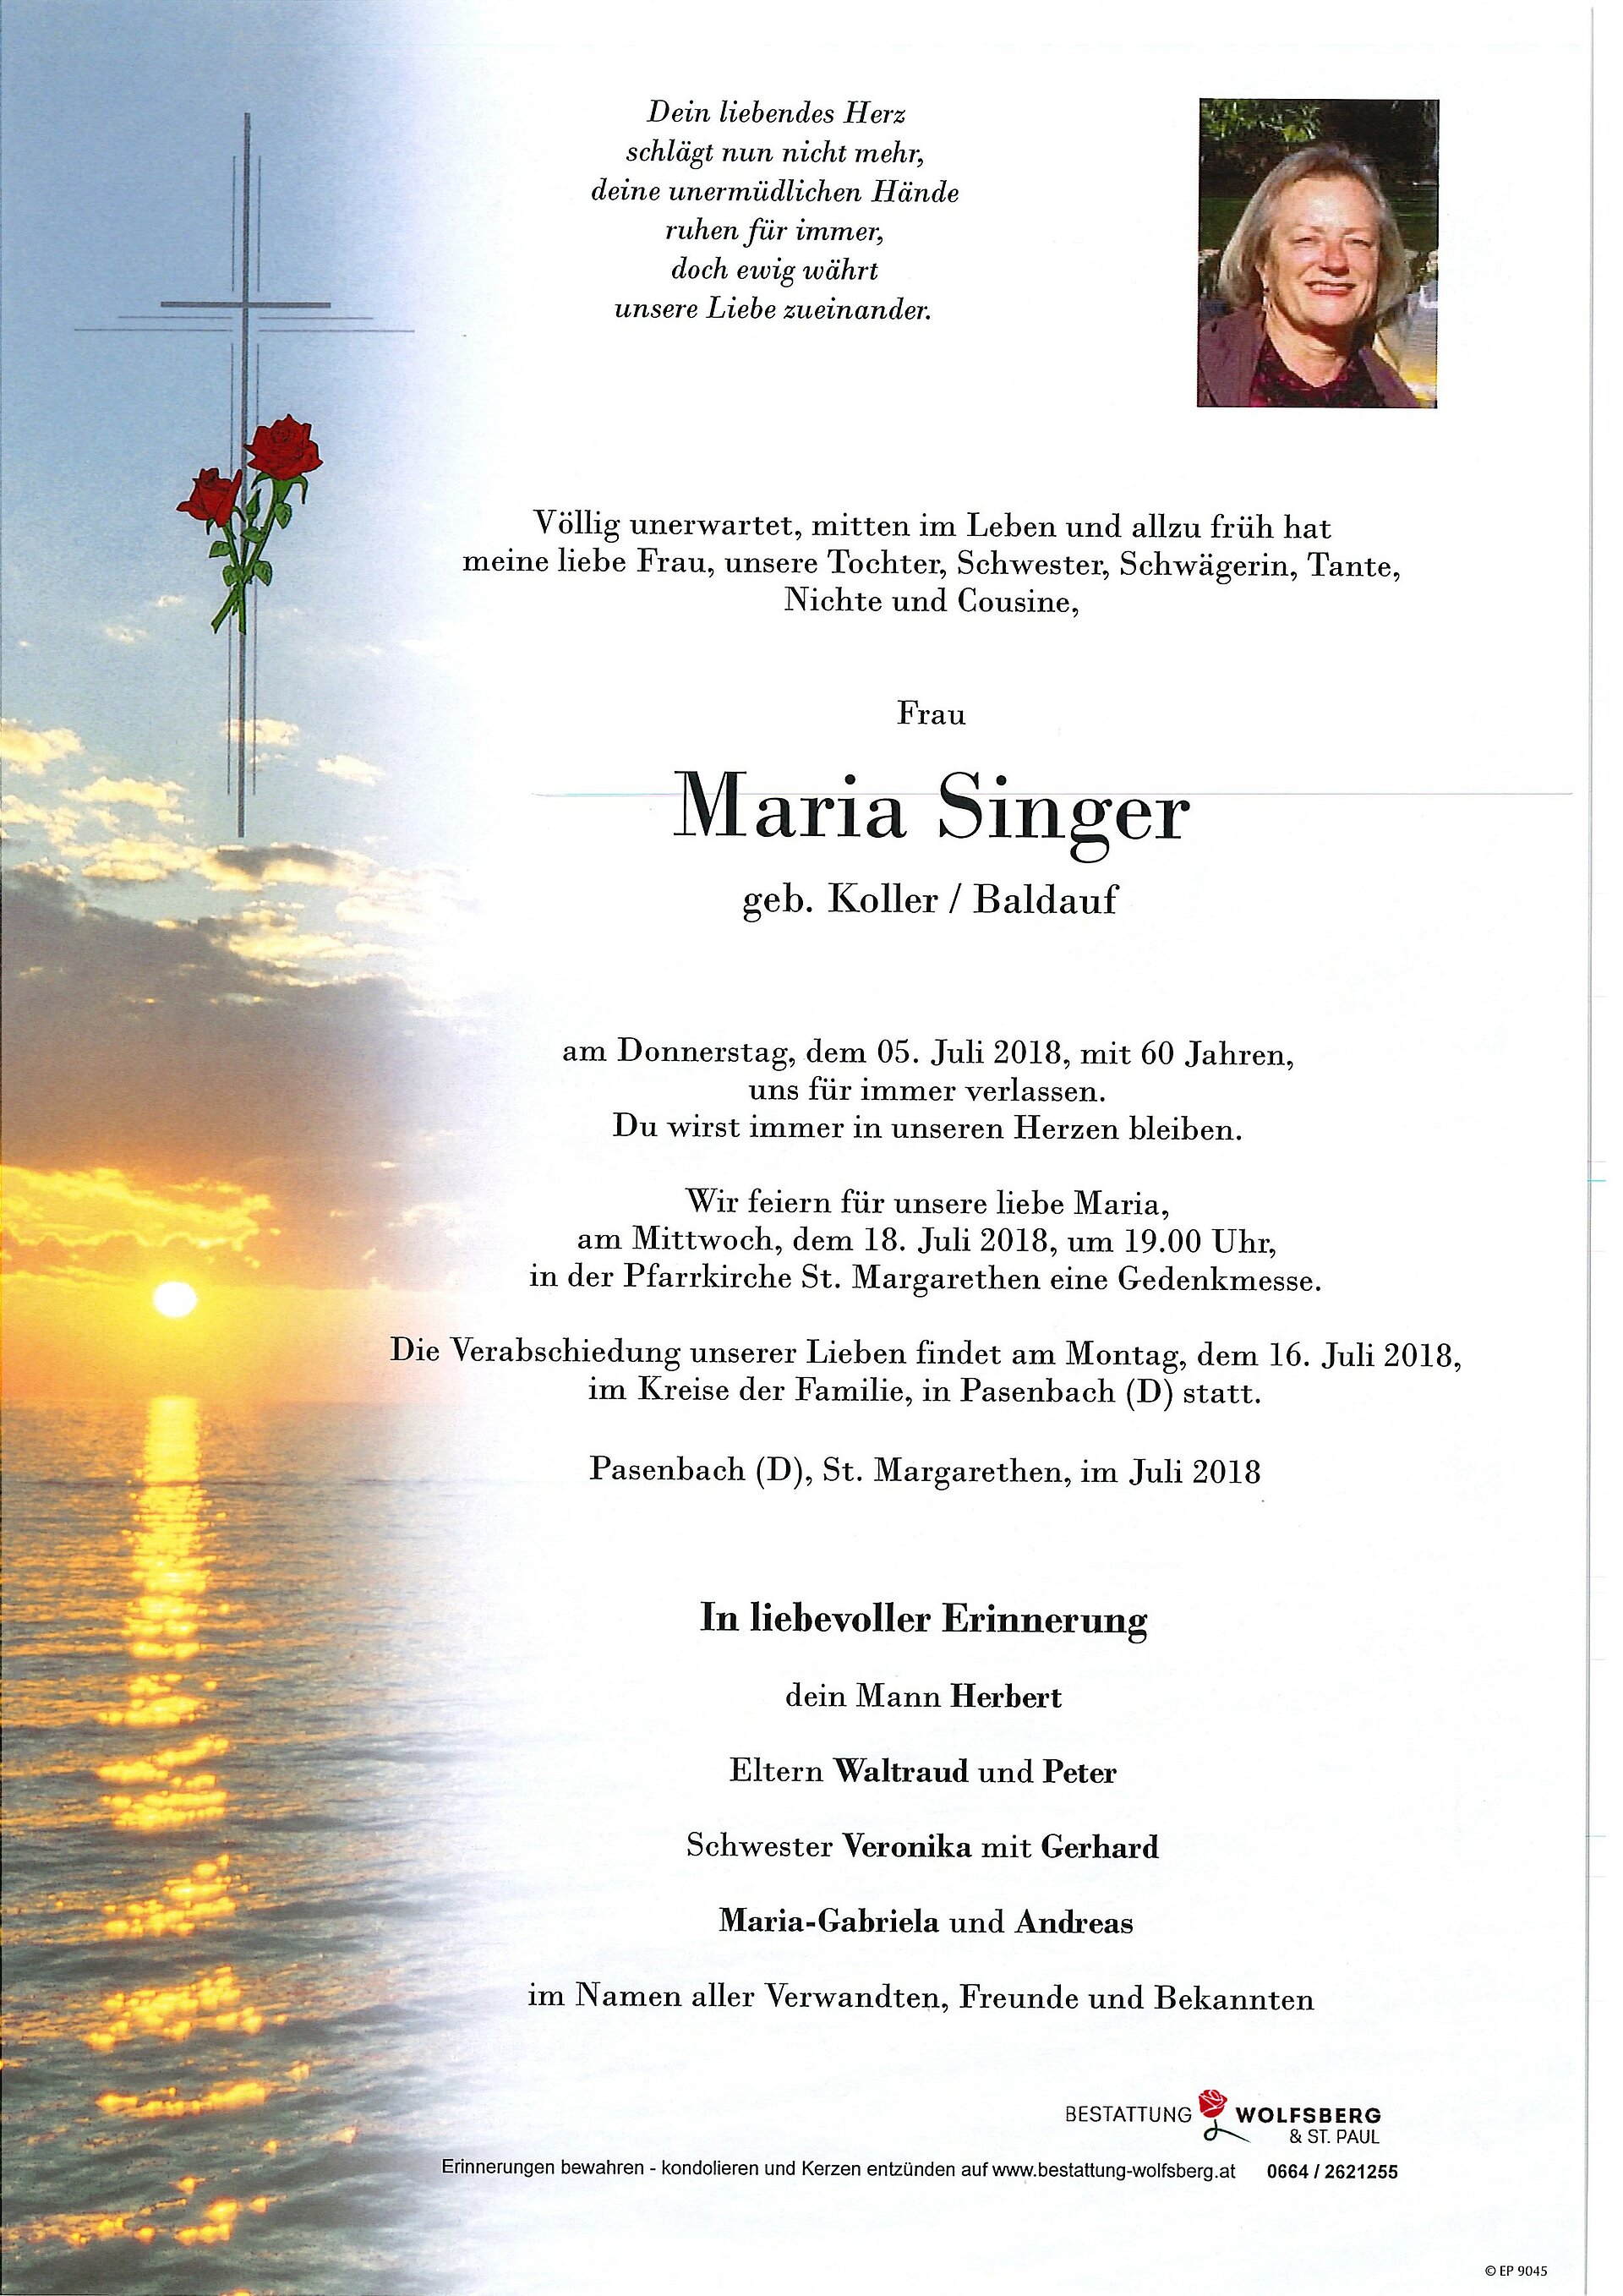 Singer-Maria.jpg